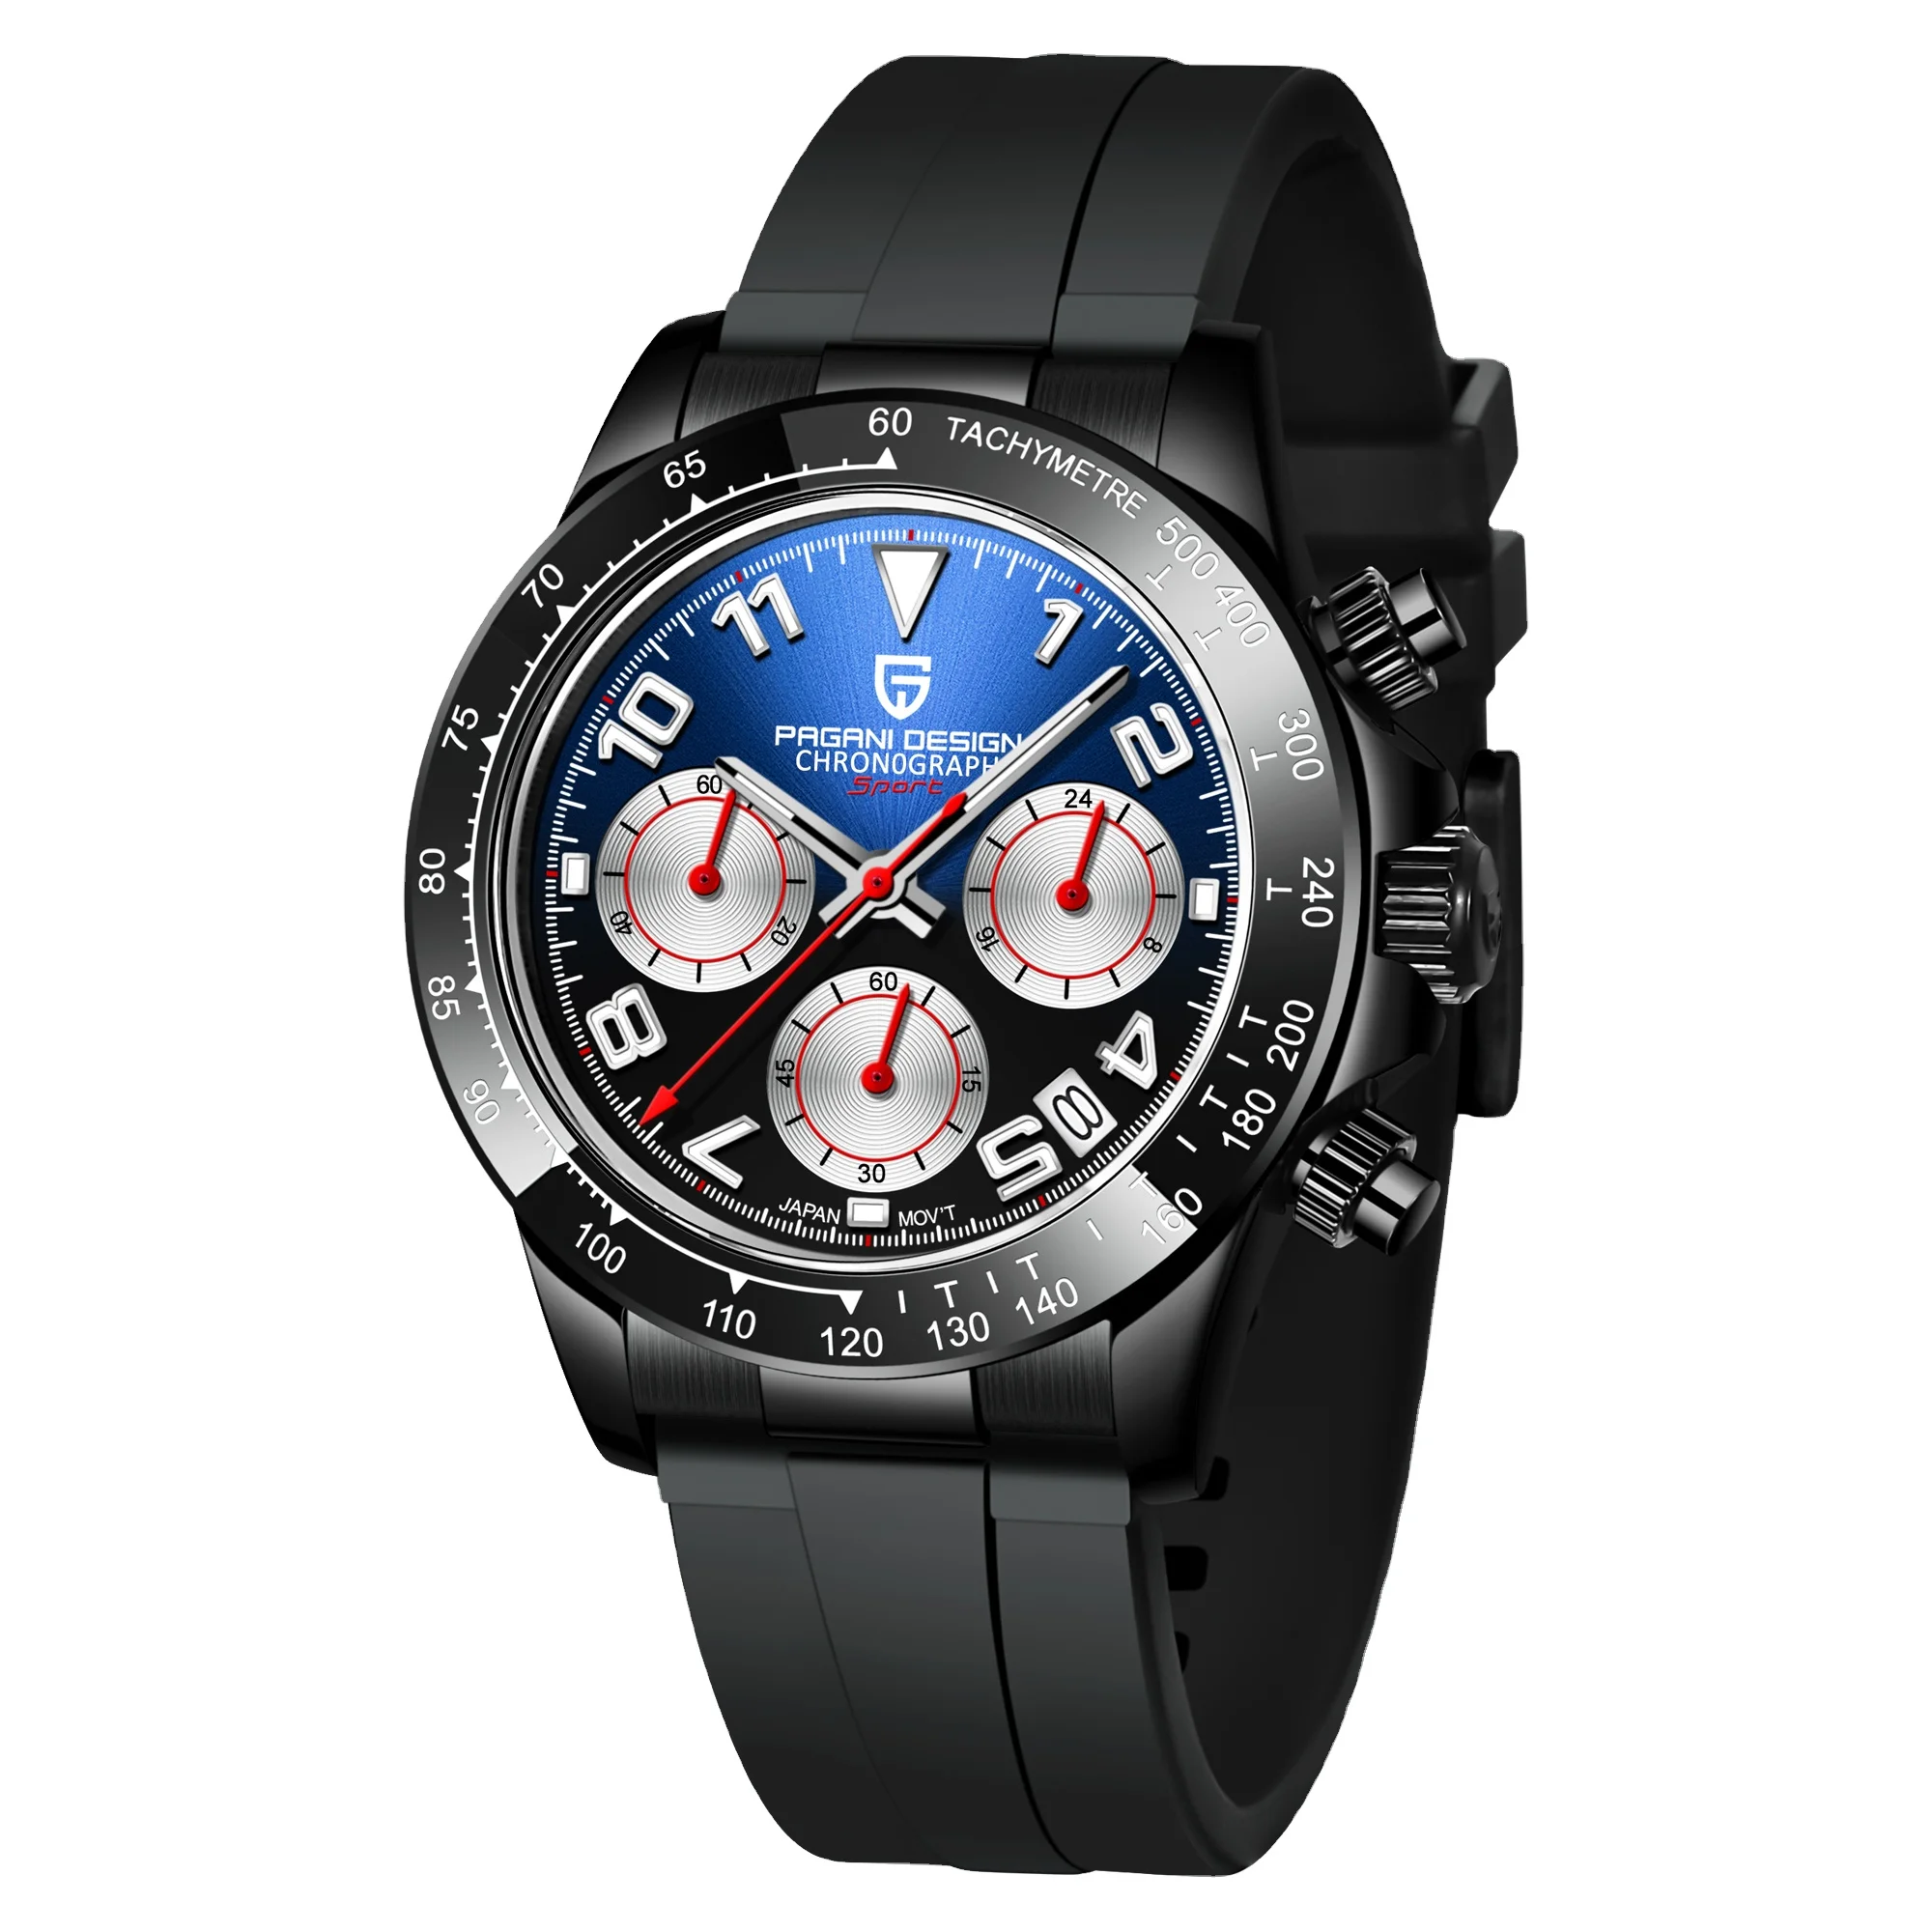 

2021 Top Luxury Brand PAGANI DESIGN Watch Quartz Watch for Men Stainless Steel Waterproof VK63 Chronograph Clock reloj hombre, Shown